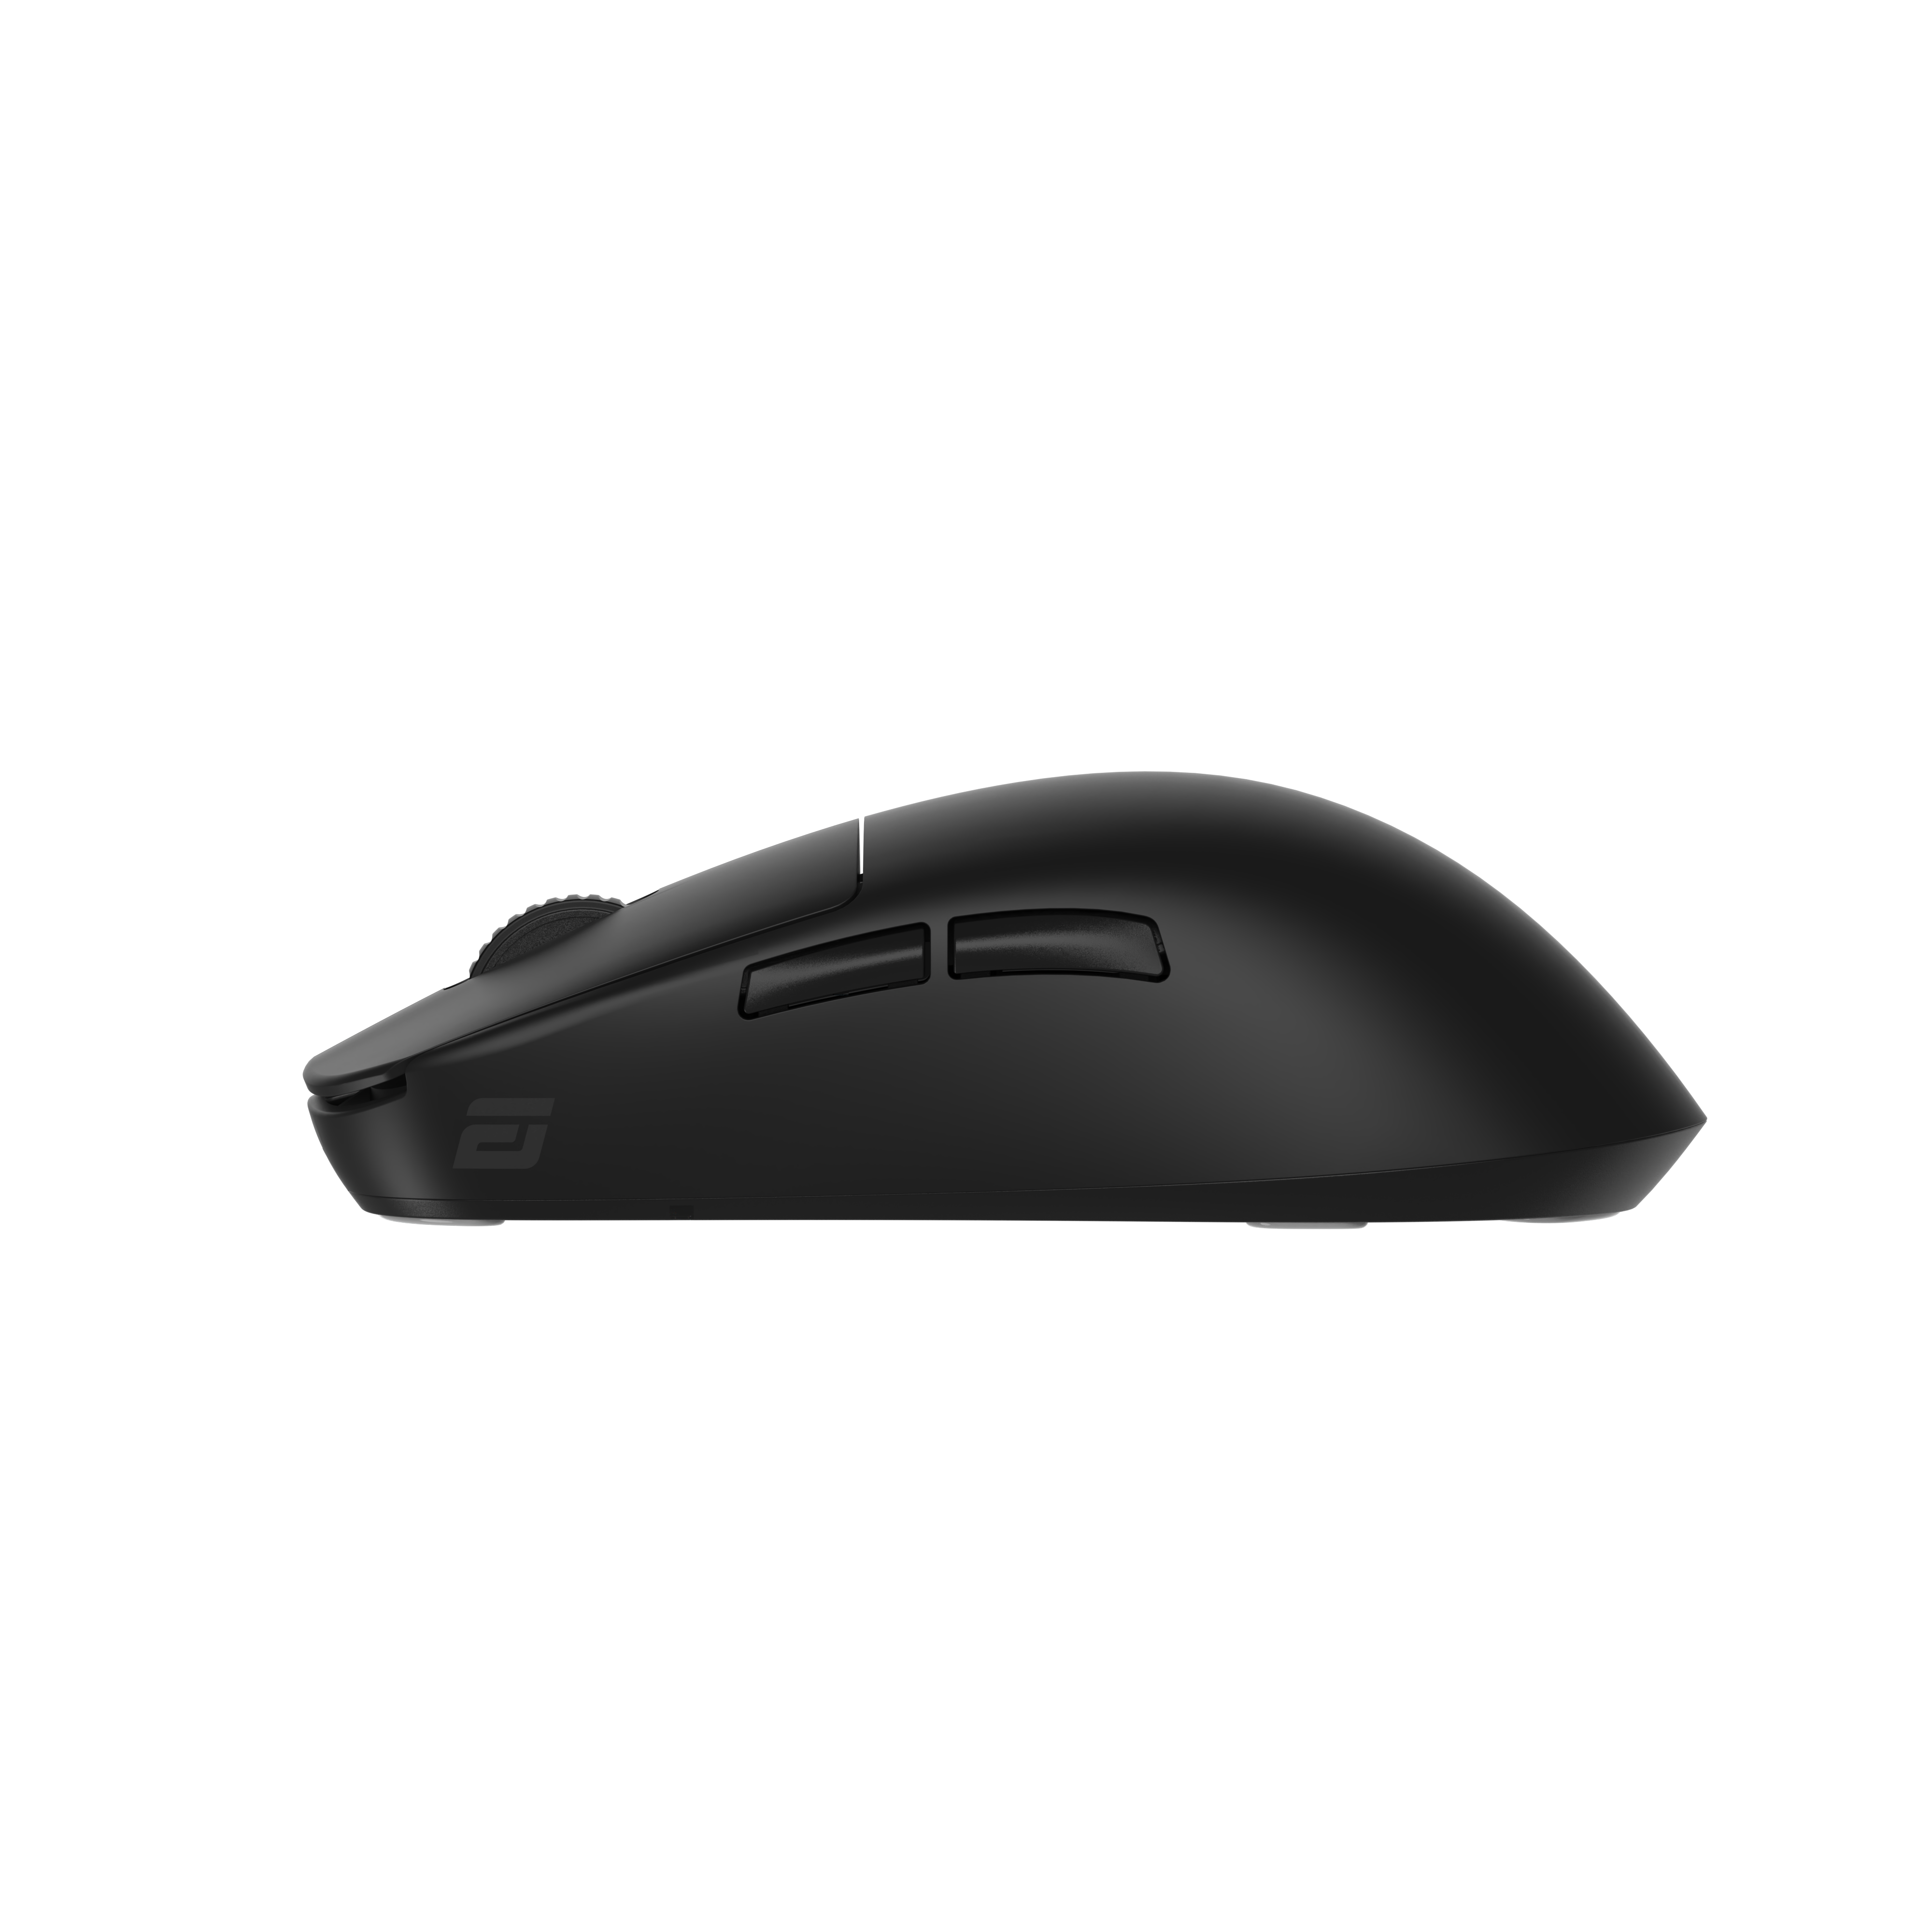 endgame-gear - OP1we Gaming Mouse - Black